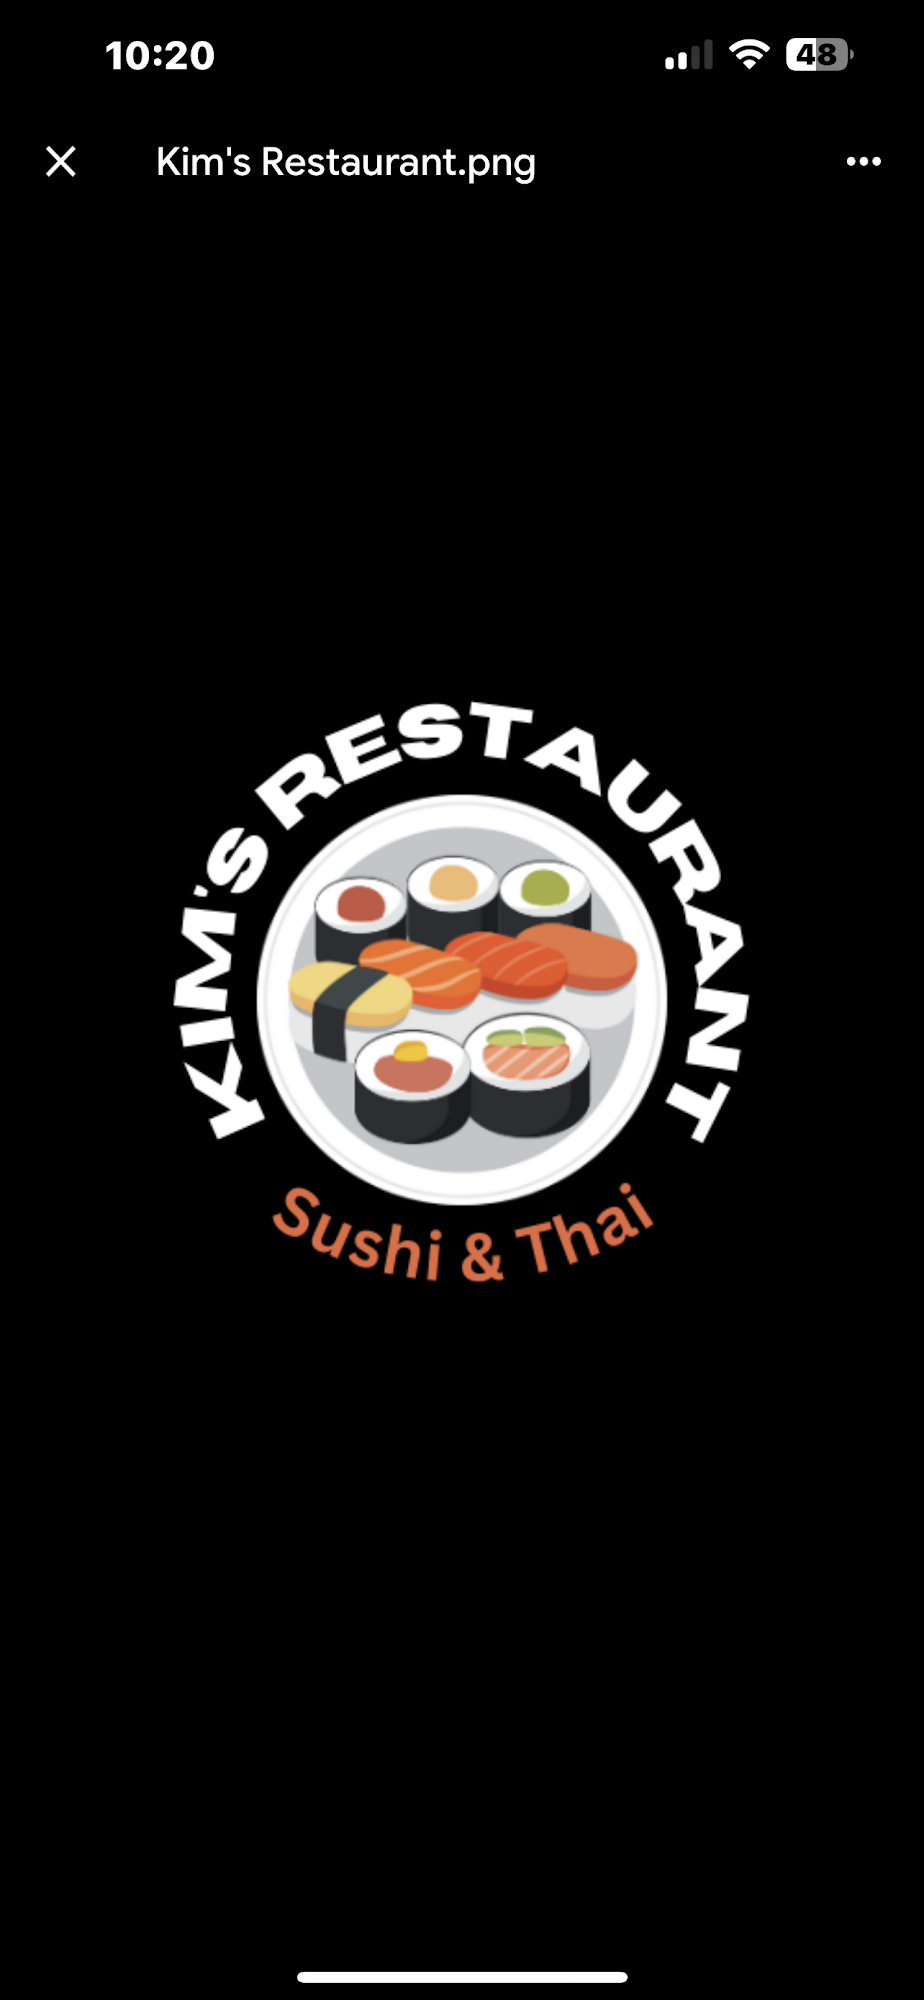 Kim's Restaurant - Sushi & Thai